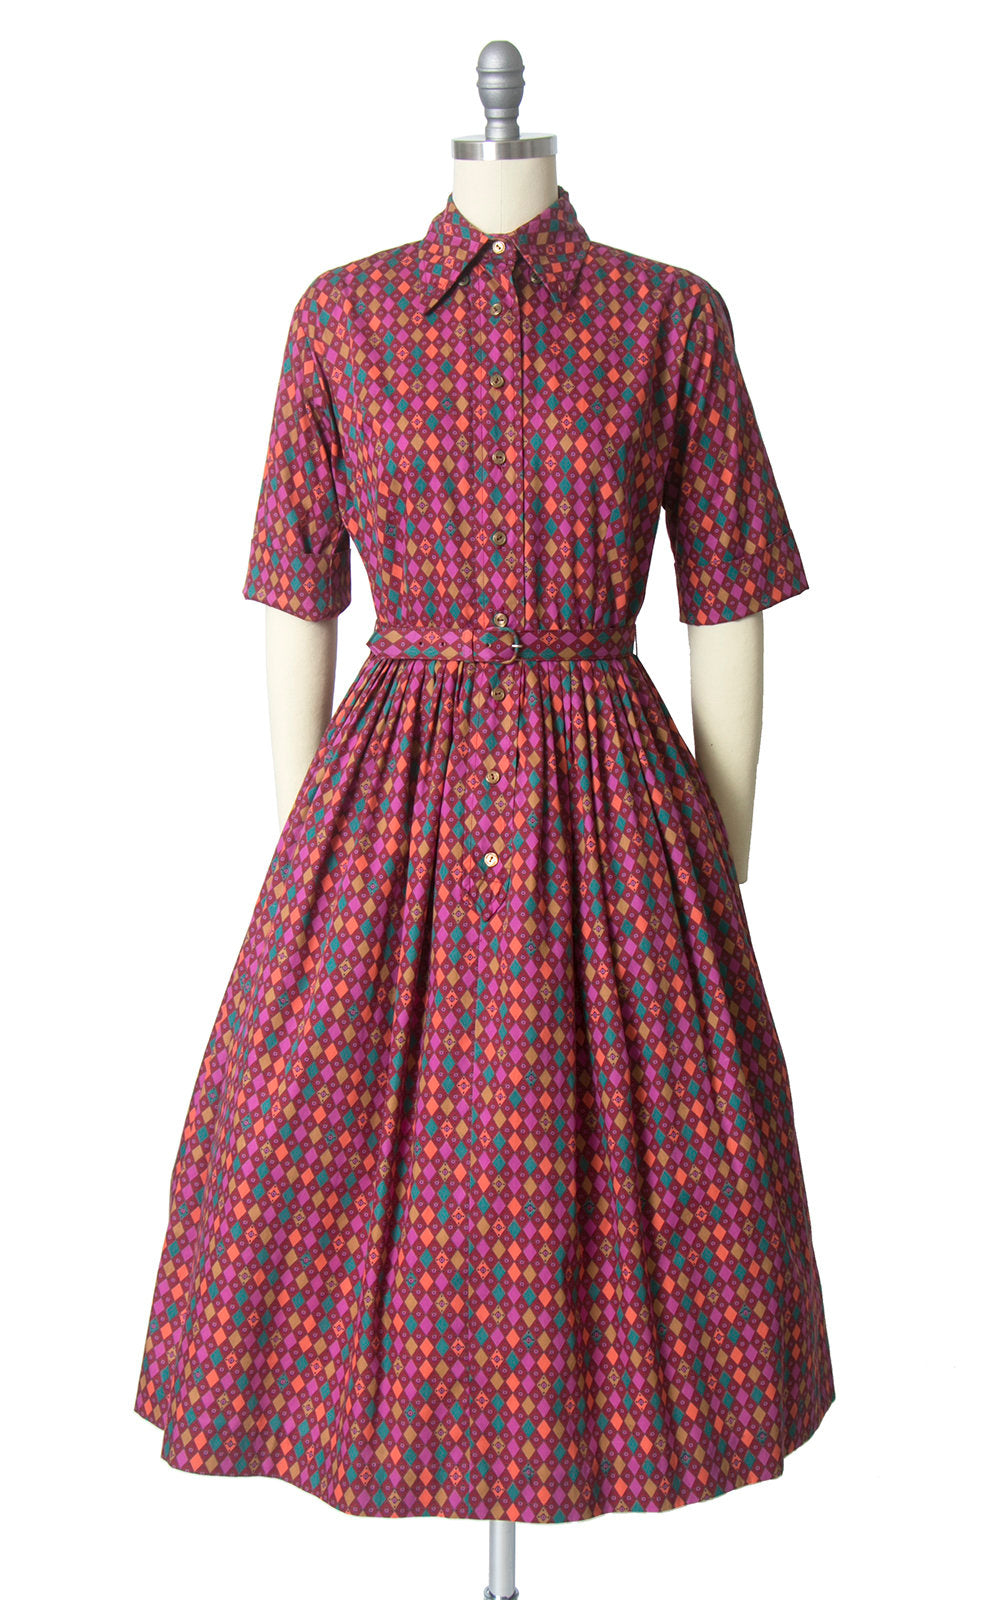 Vintage 1950s Dress | 50s Harlequin Printed Cotton Shirt Dress Full Skirt Shirtwaist Day Dress (small)